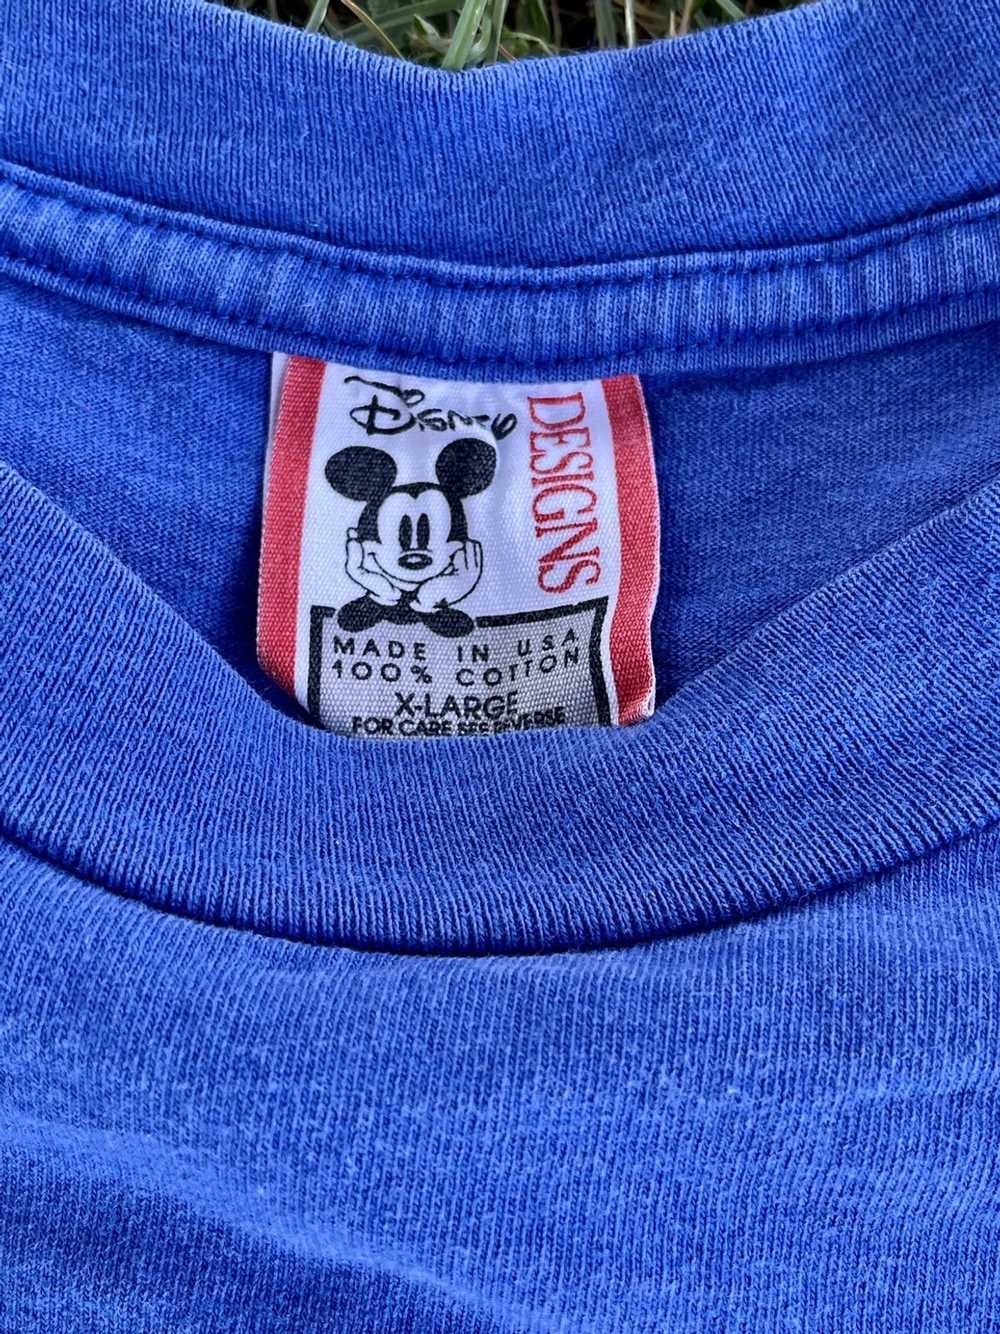 Disney × Vintage 1990s Disneyland 40th Anniversary - image 2